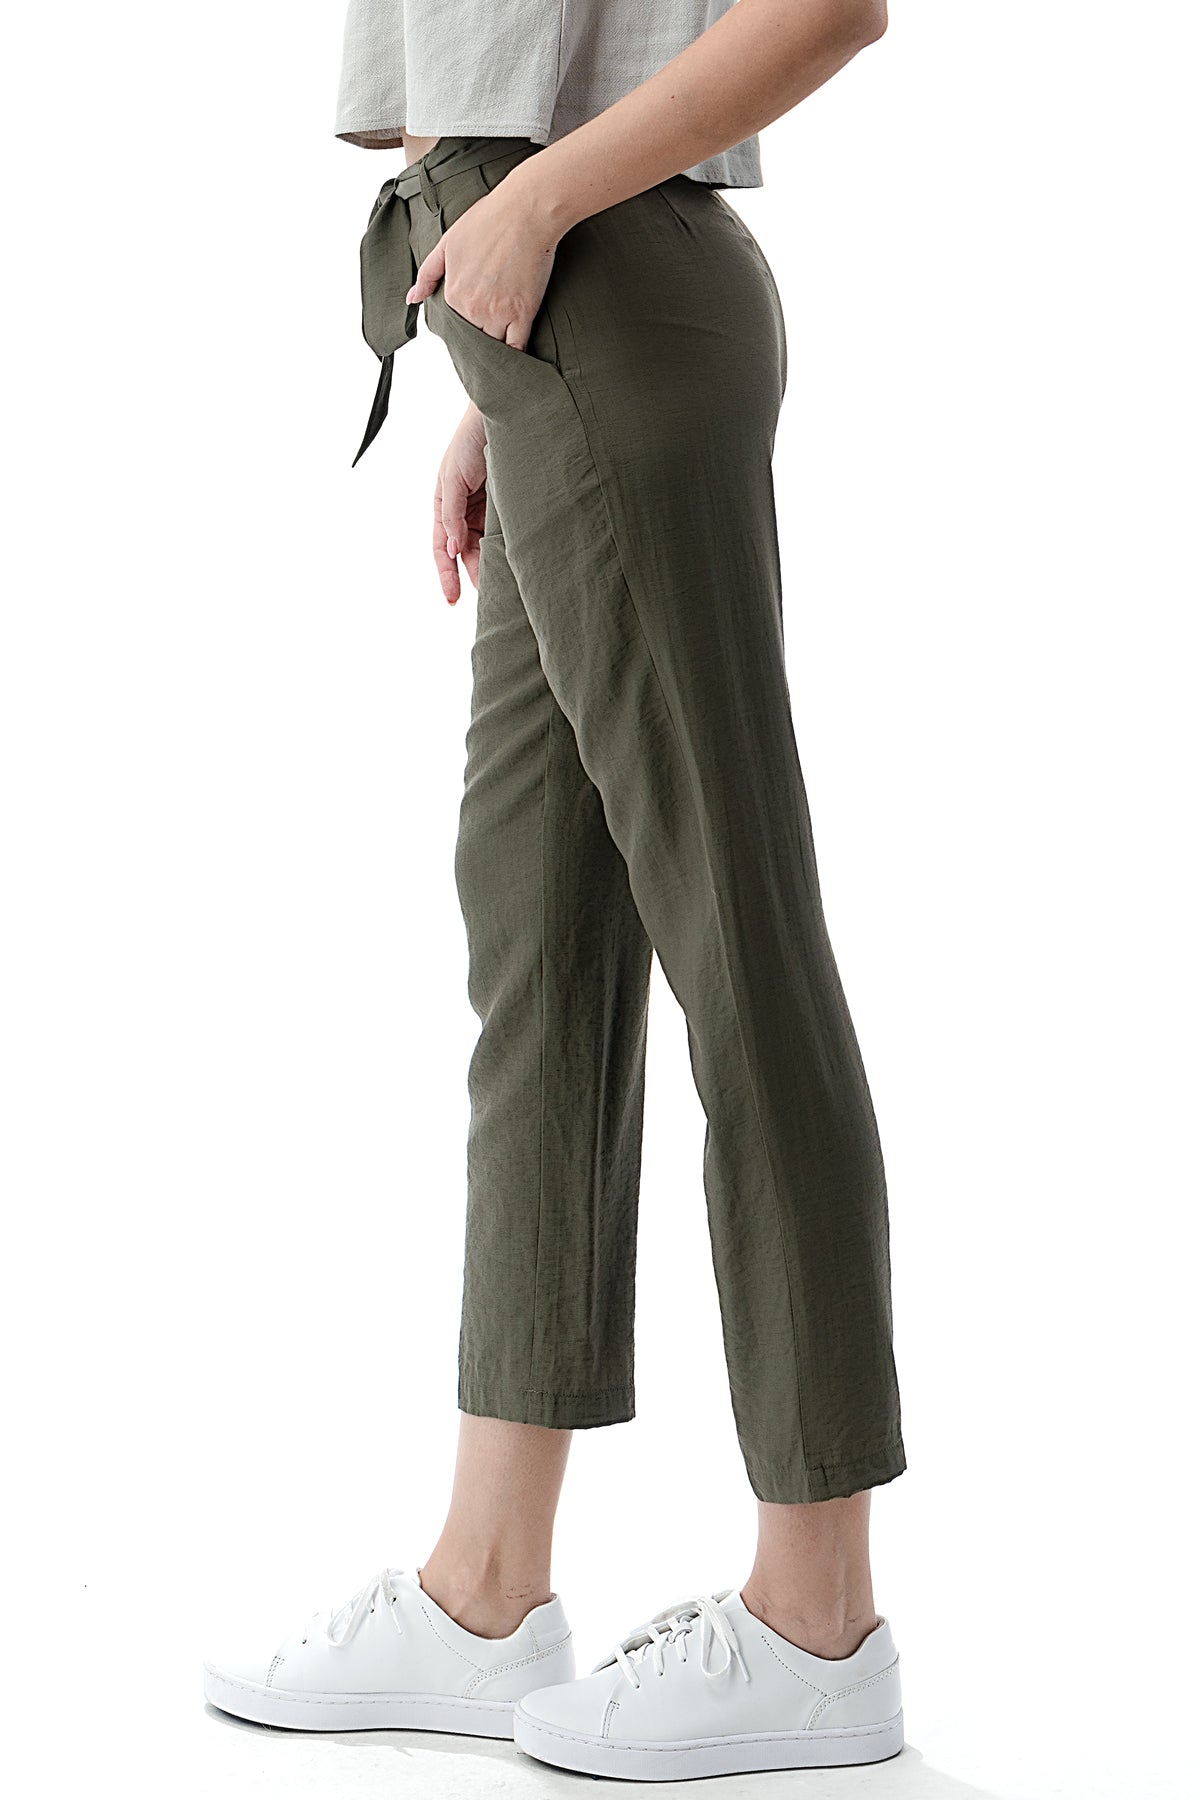 EDGY Land Girl's and Women's Self Tie Belt Slit Pocket Slim-Sation CroPPEd Pant